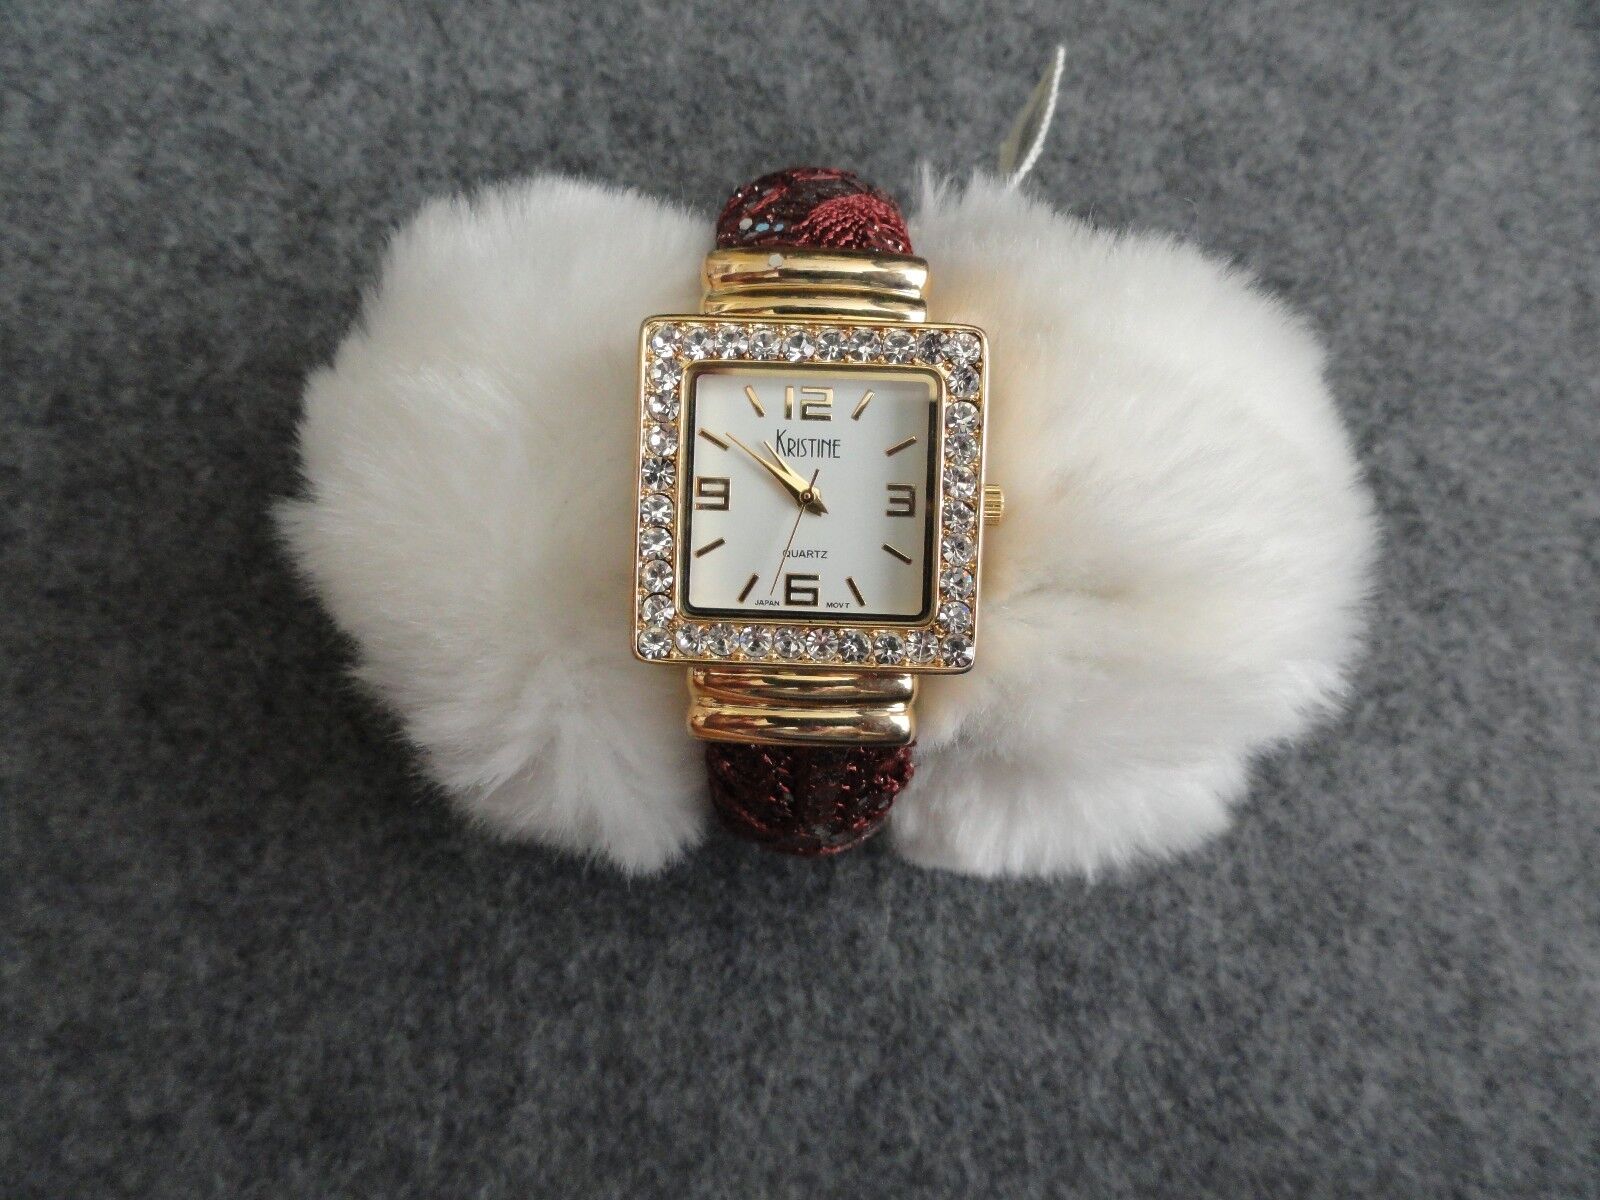 New Kristine Quartz Ladies Watch | eBay